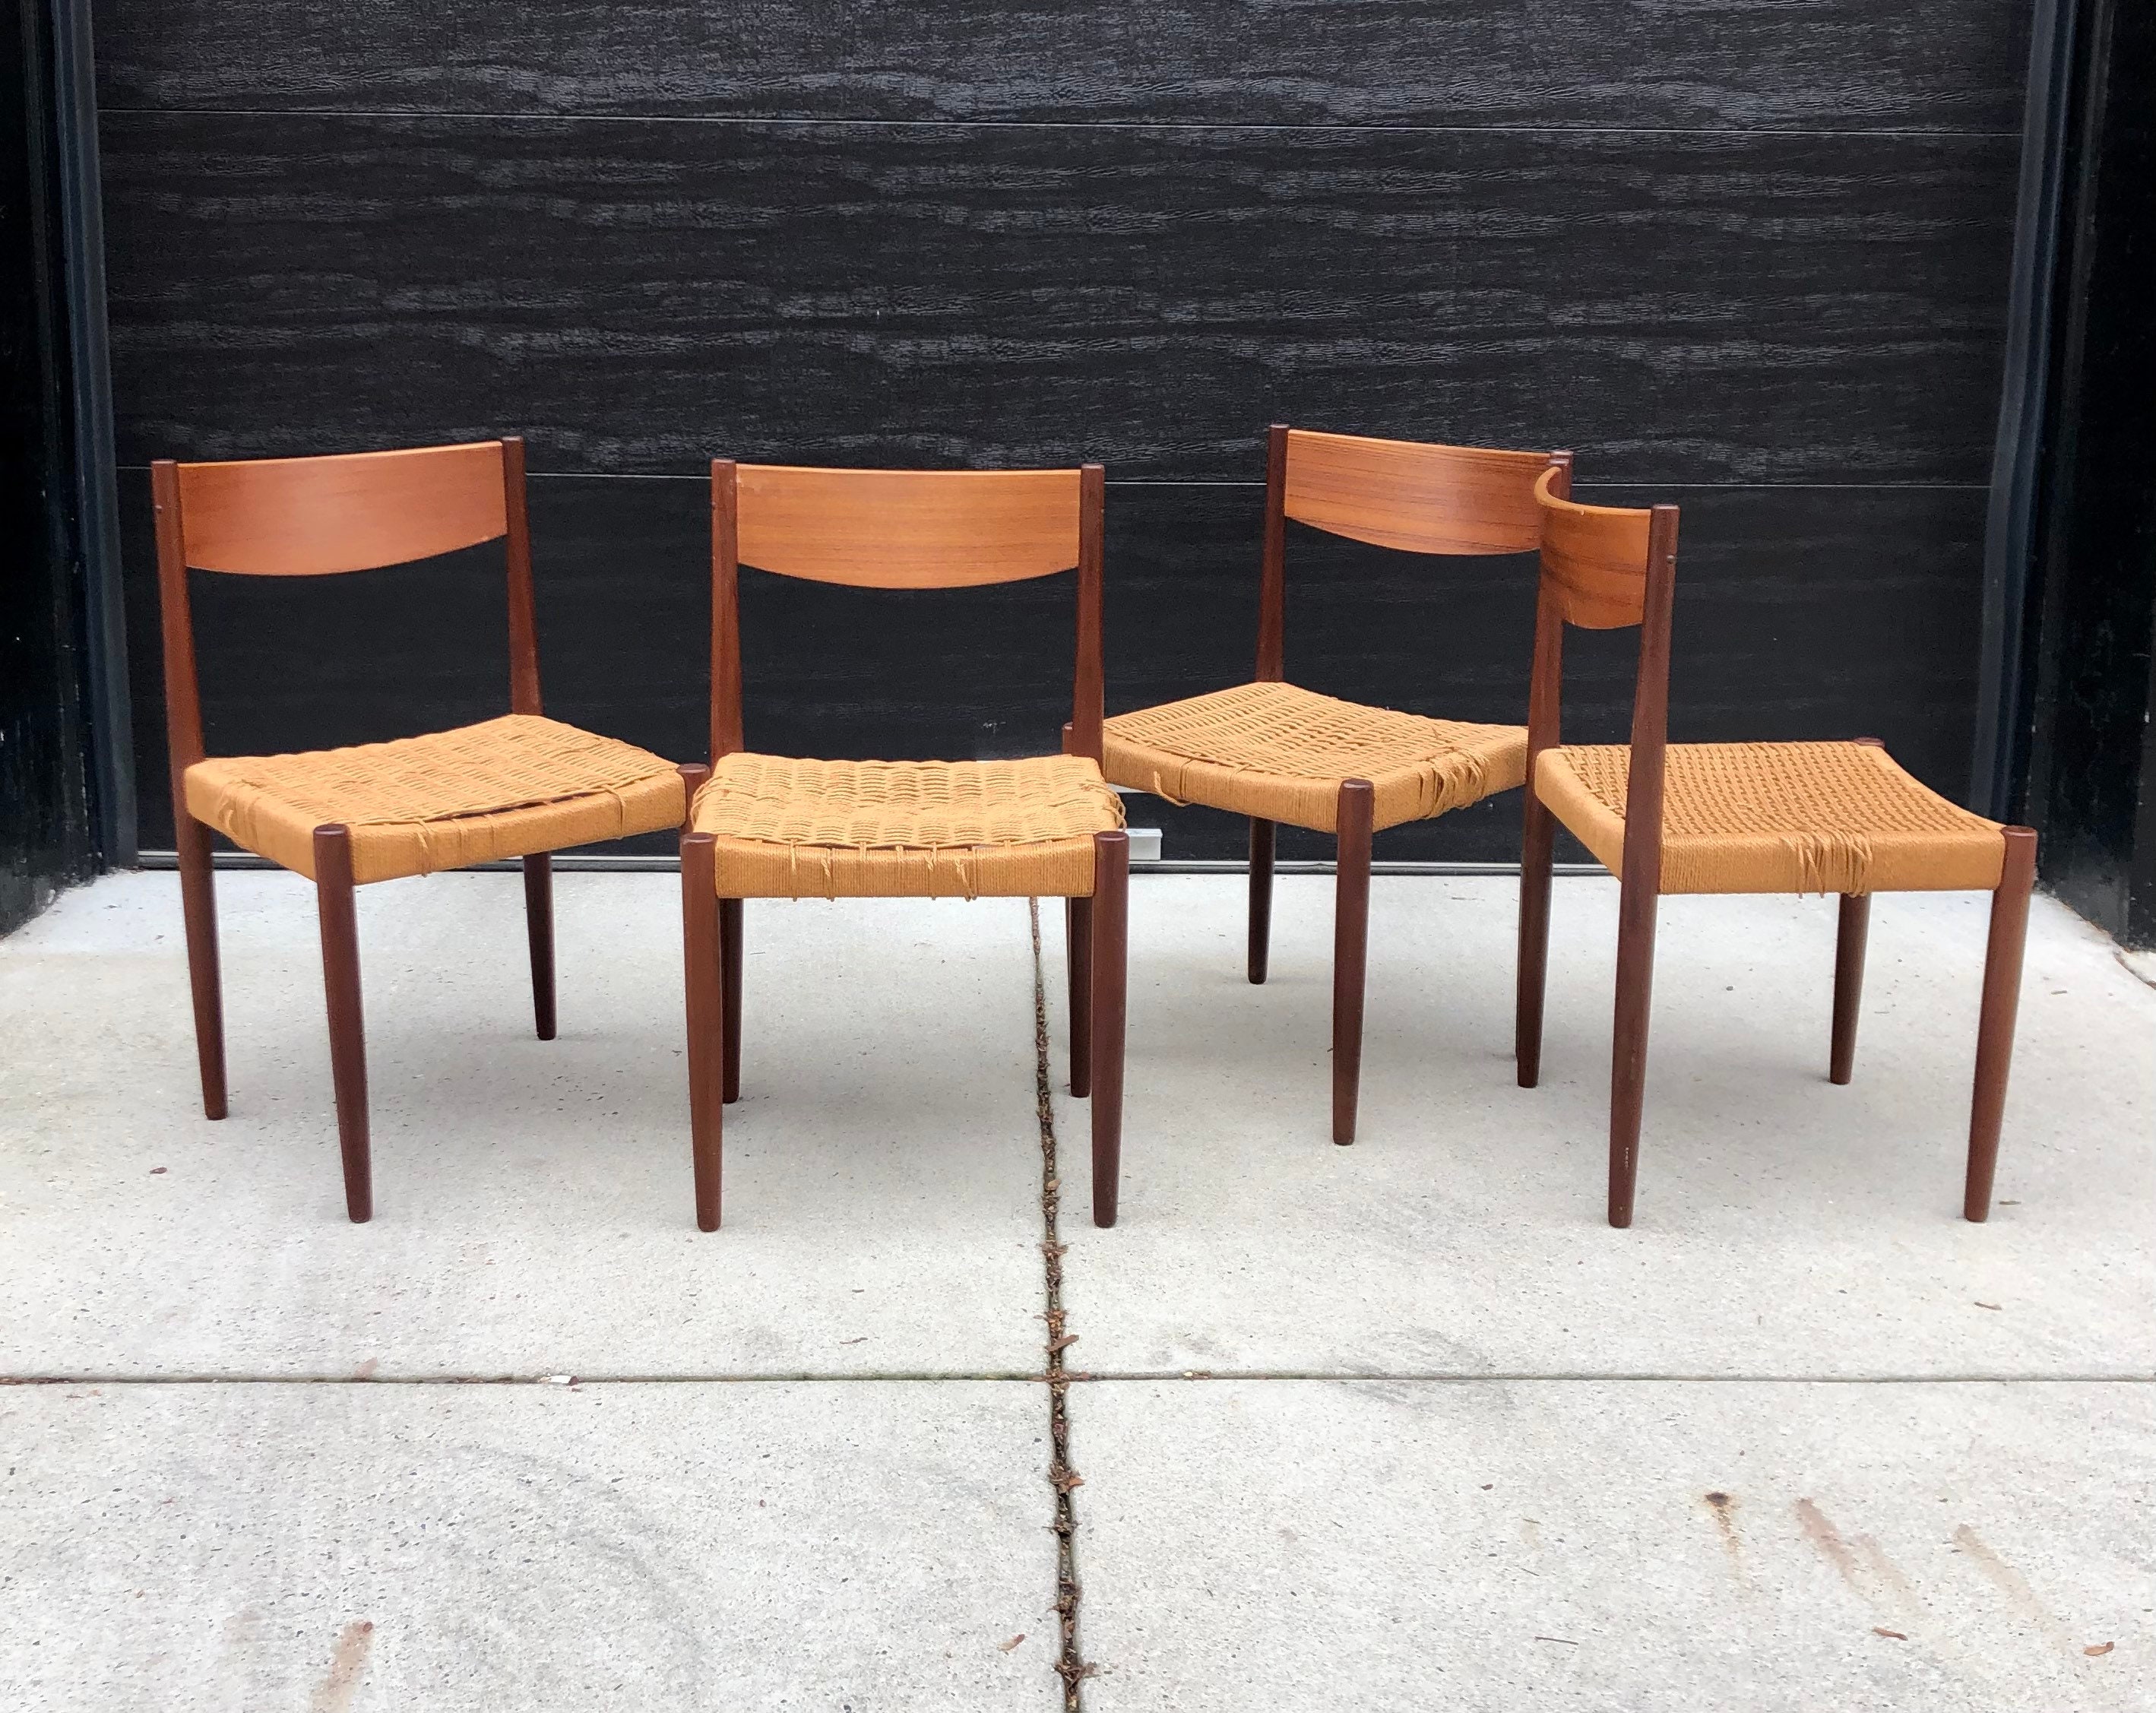 3mm Unlaced Genuine Danish Paper Cord Natural Seat Weaving Material for  Danish/mid Century Modern Furniture Designs 